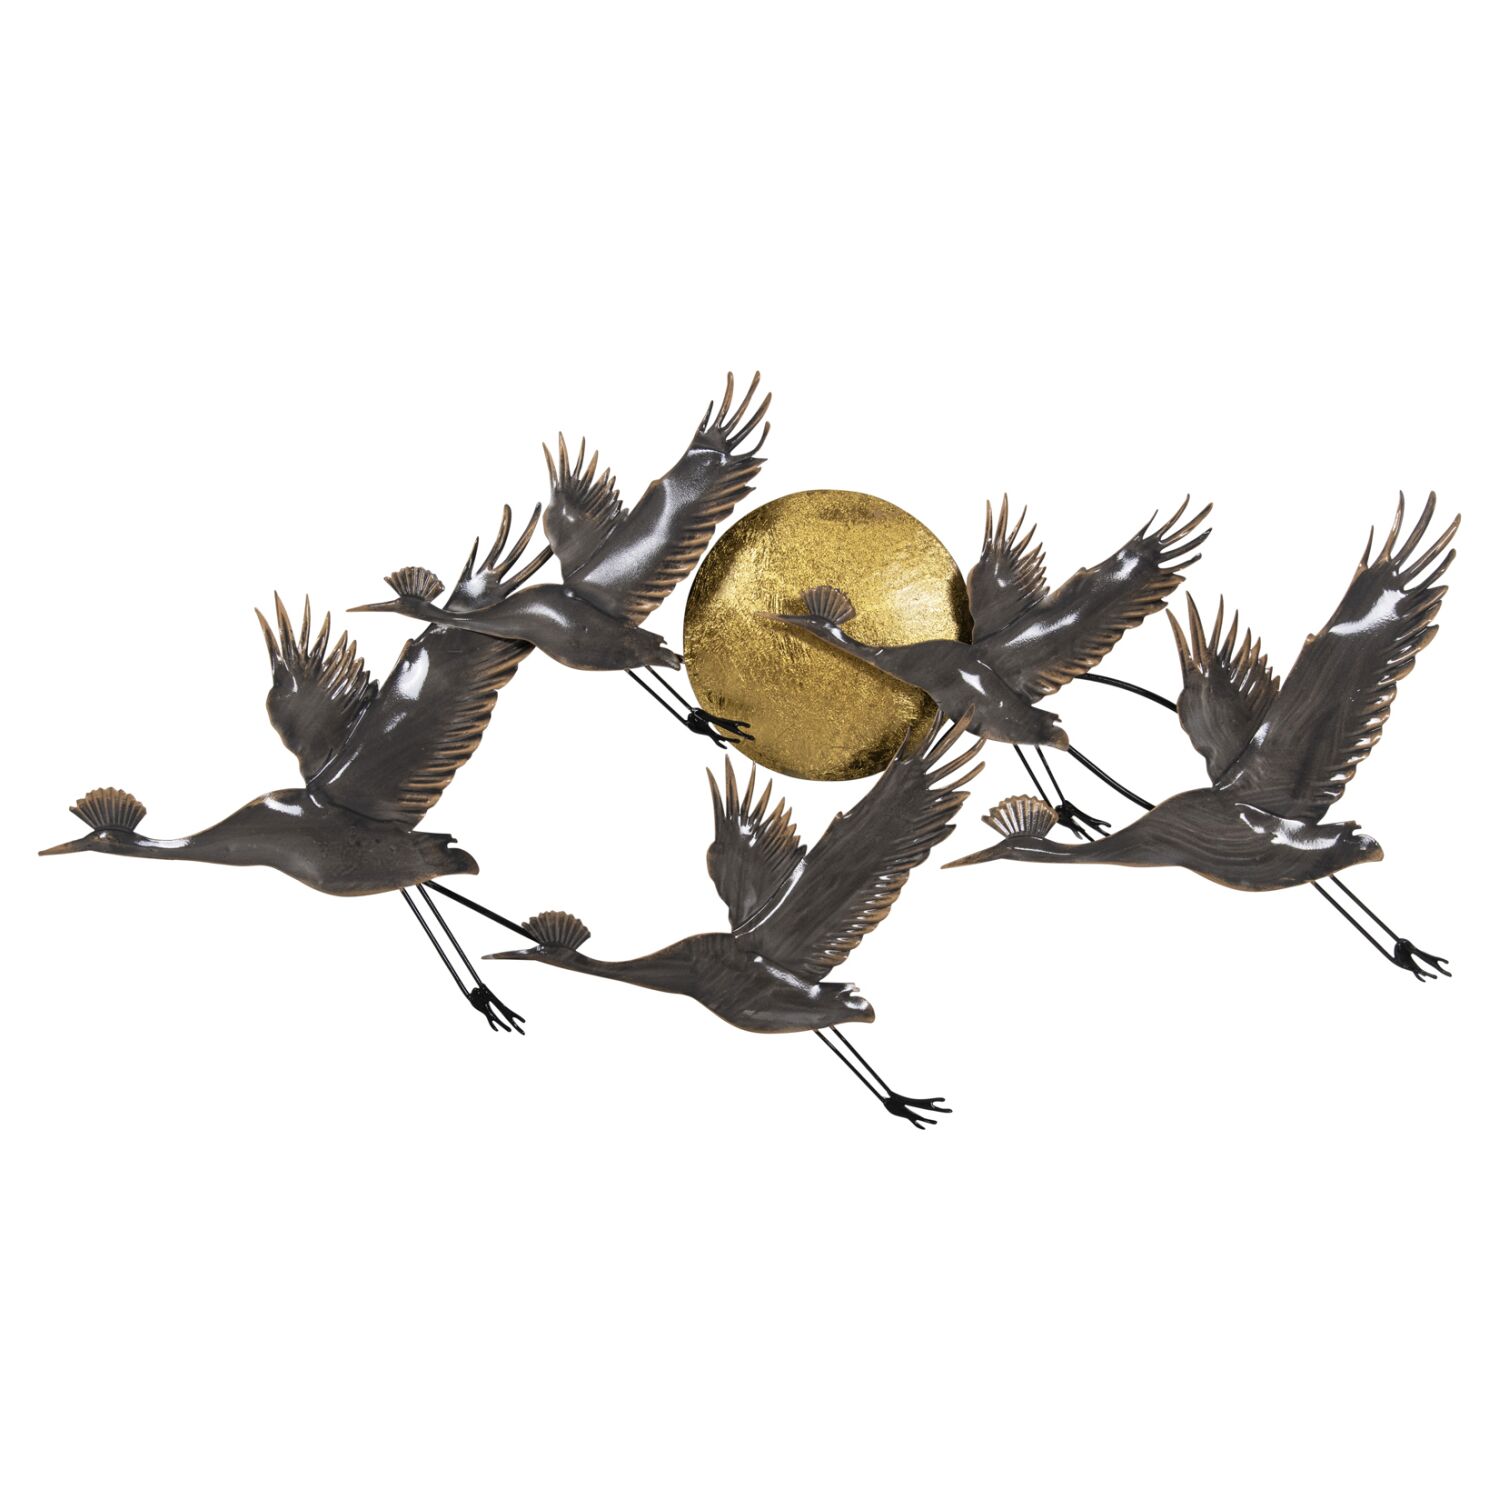 WALL DECOR METALLIC HM4208 BIRDS IN GREY-GOLD 90x46Hcm.